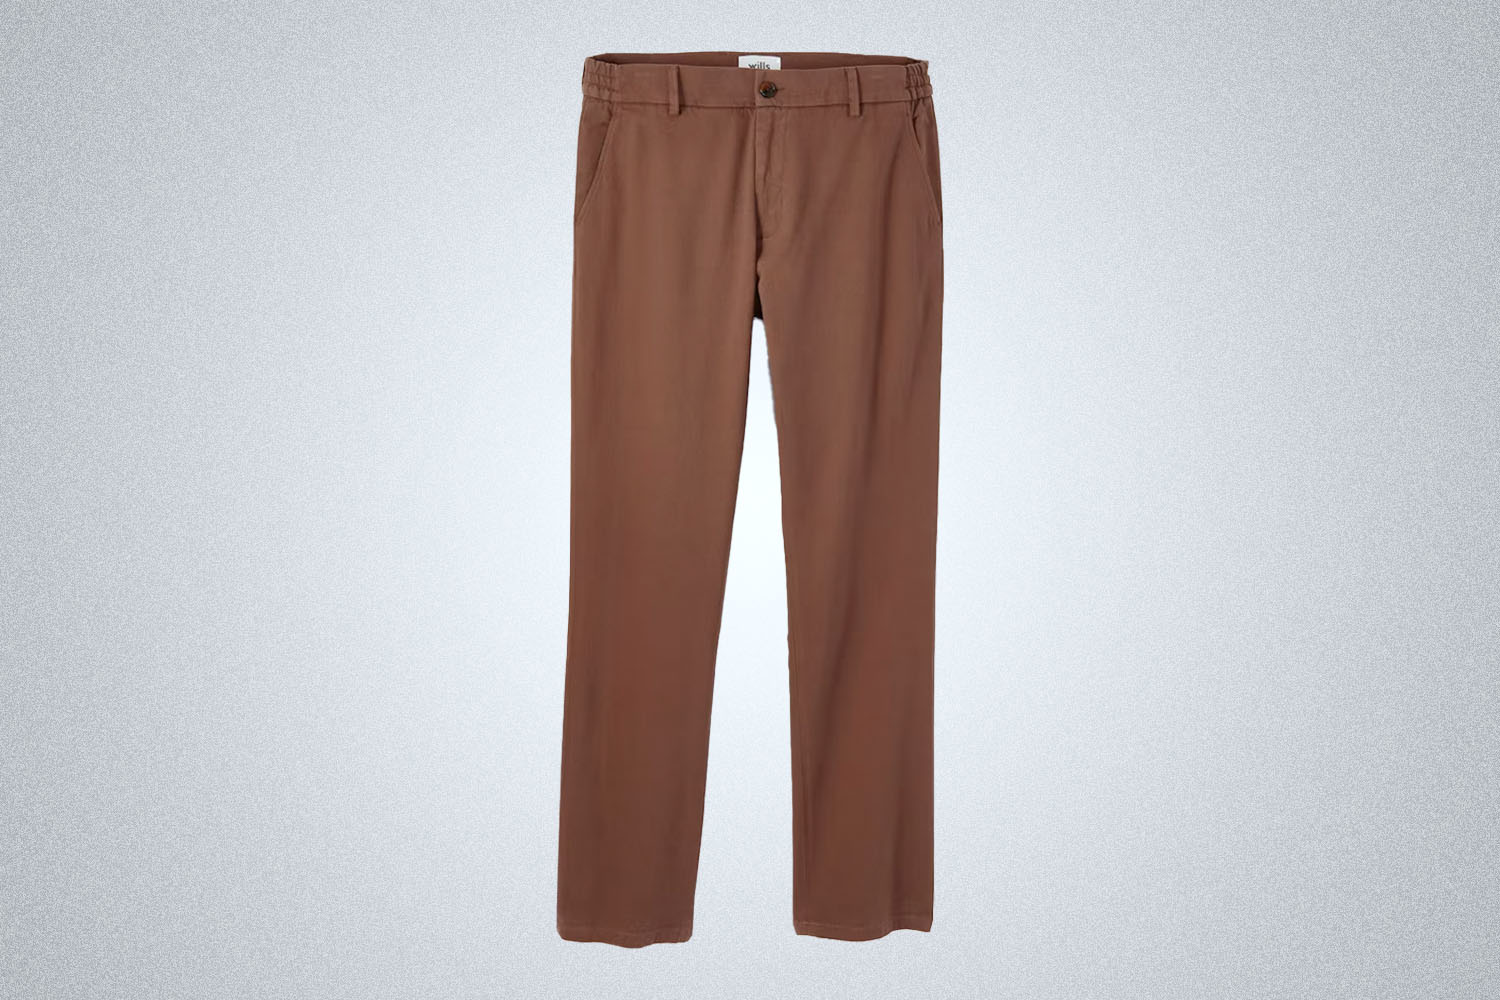 Jack Wills Womens Lingham Skinny Jogging Bottoms Slim Fit Trousers Pants  Print  eBay